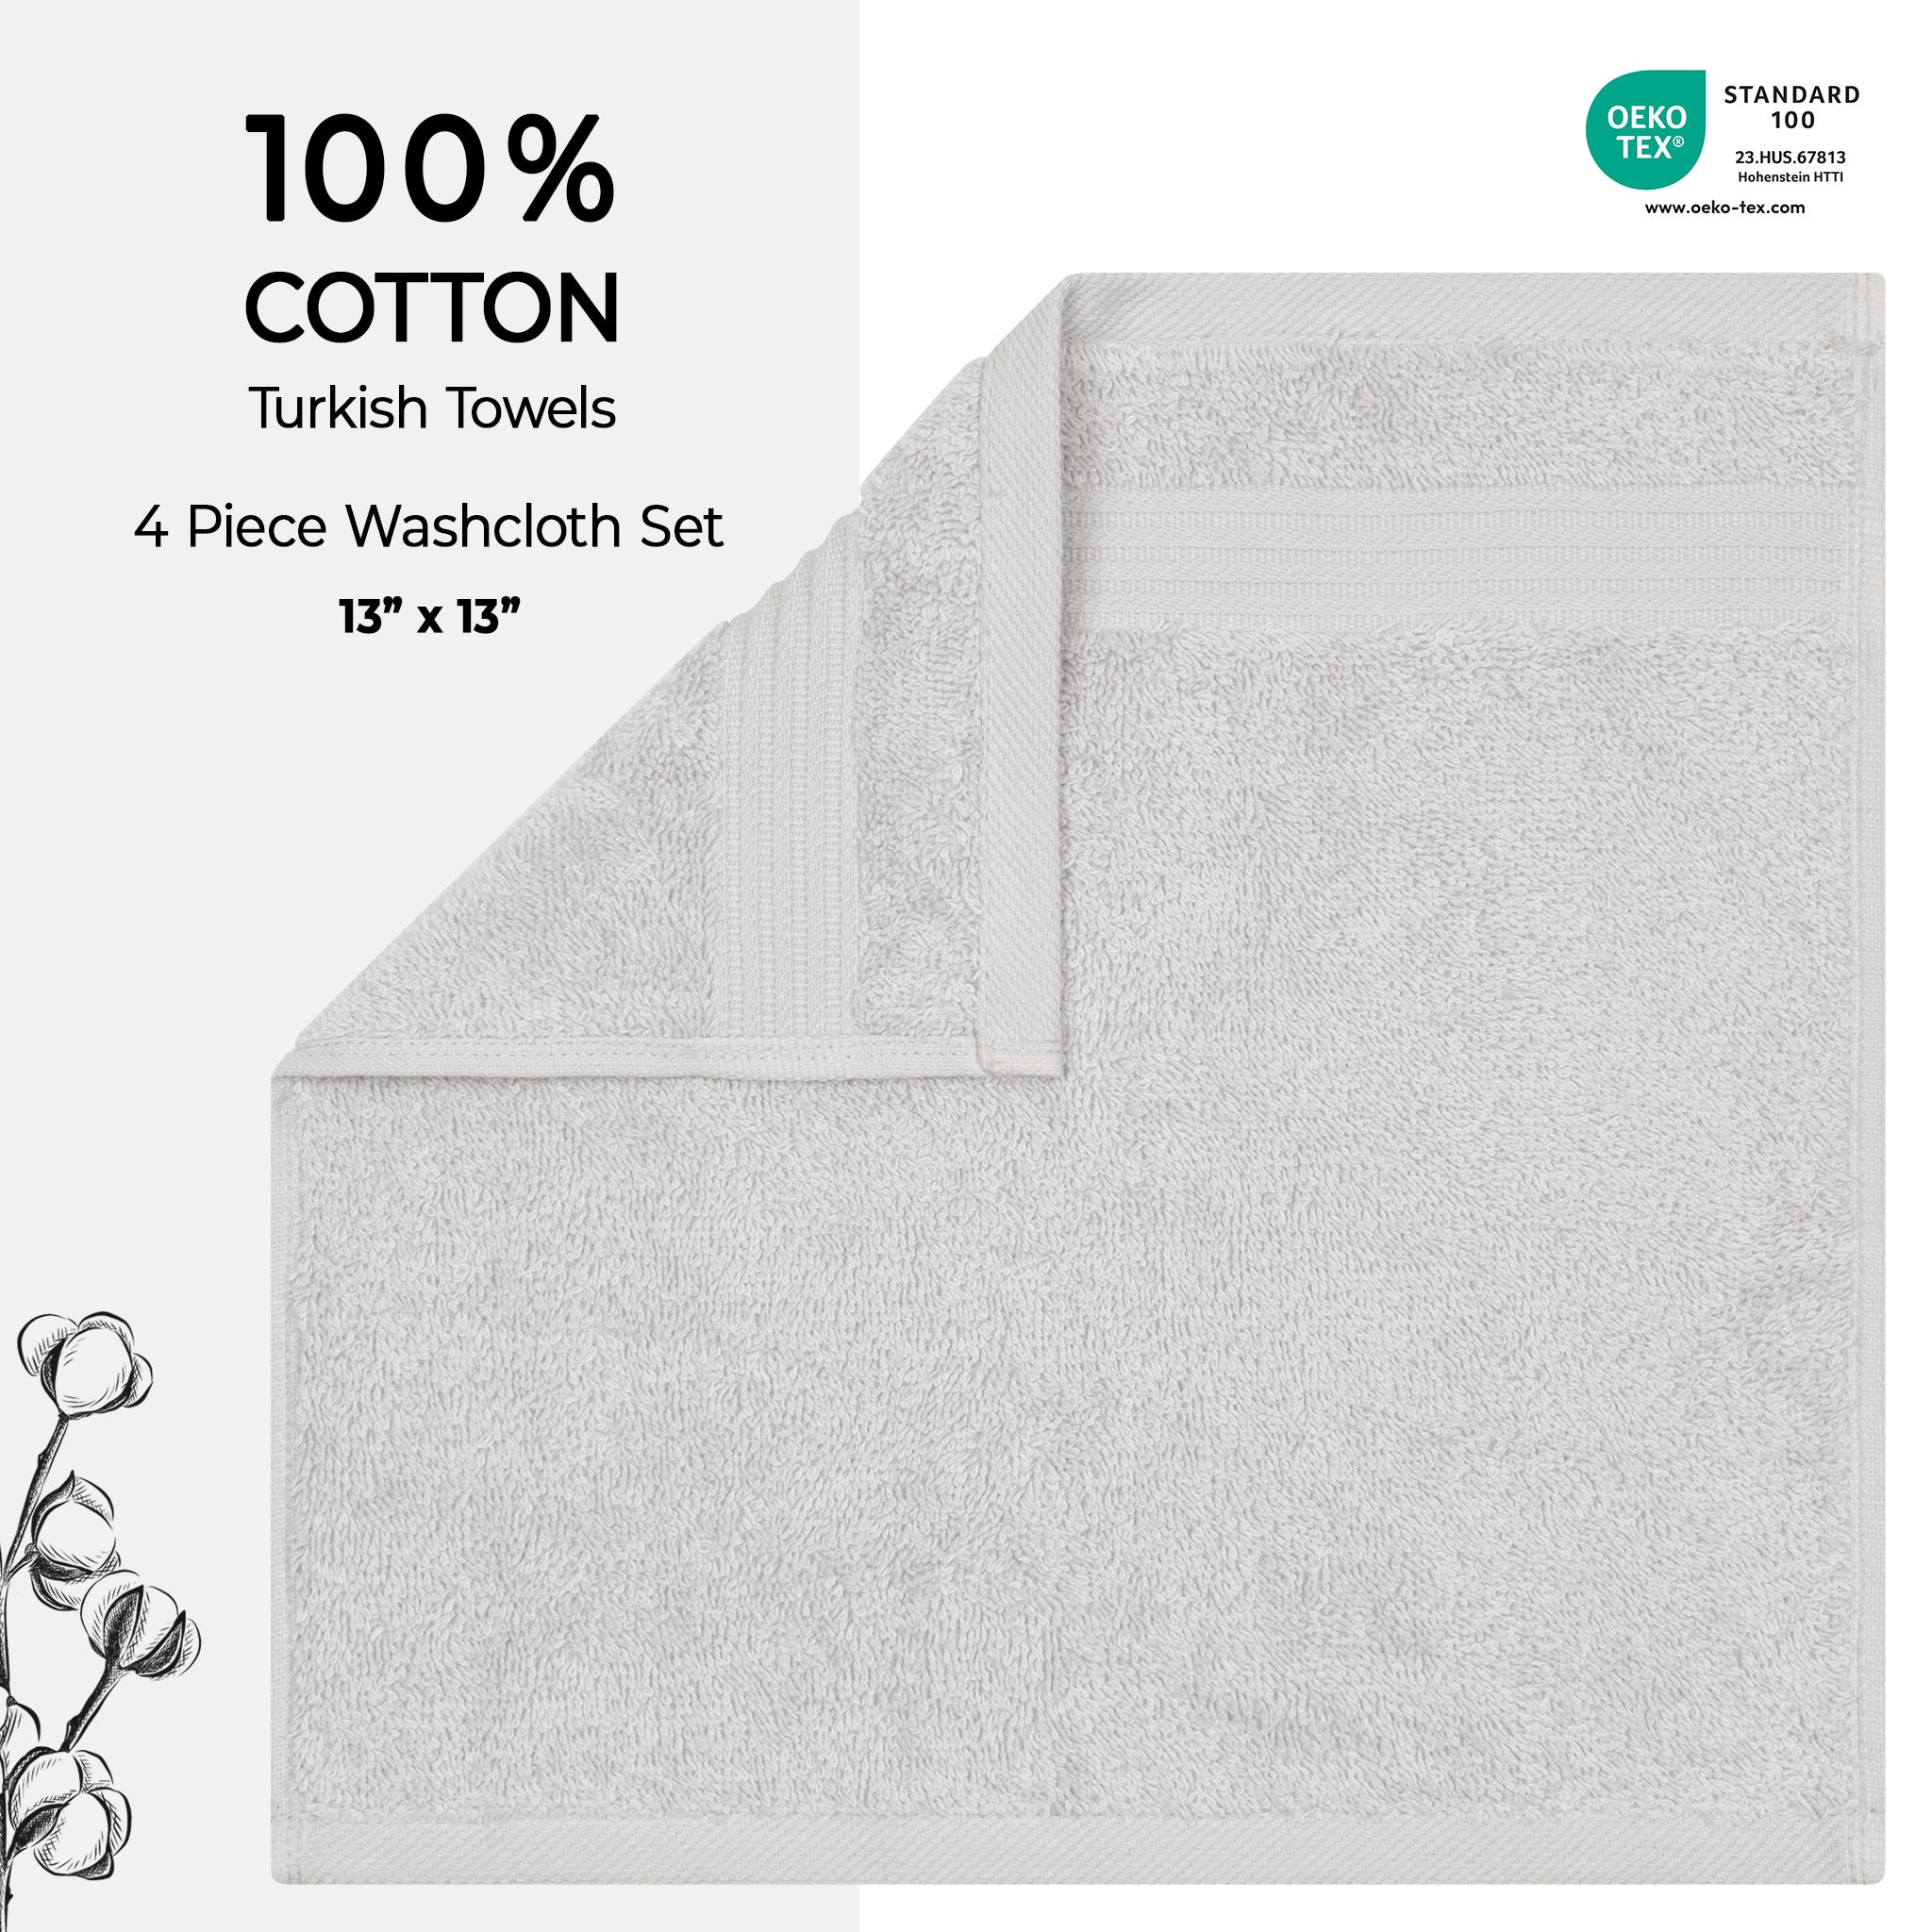 American Soft Linen Bekos 100% Cotton Turkish Towels, 4 Piece Washcloth Towel Set -silver-gray-02